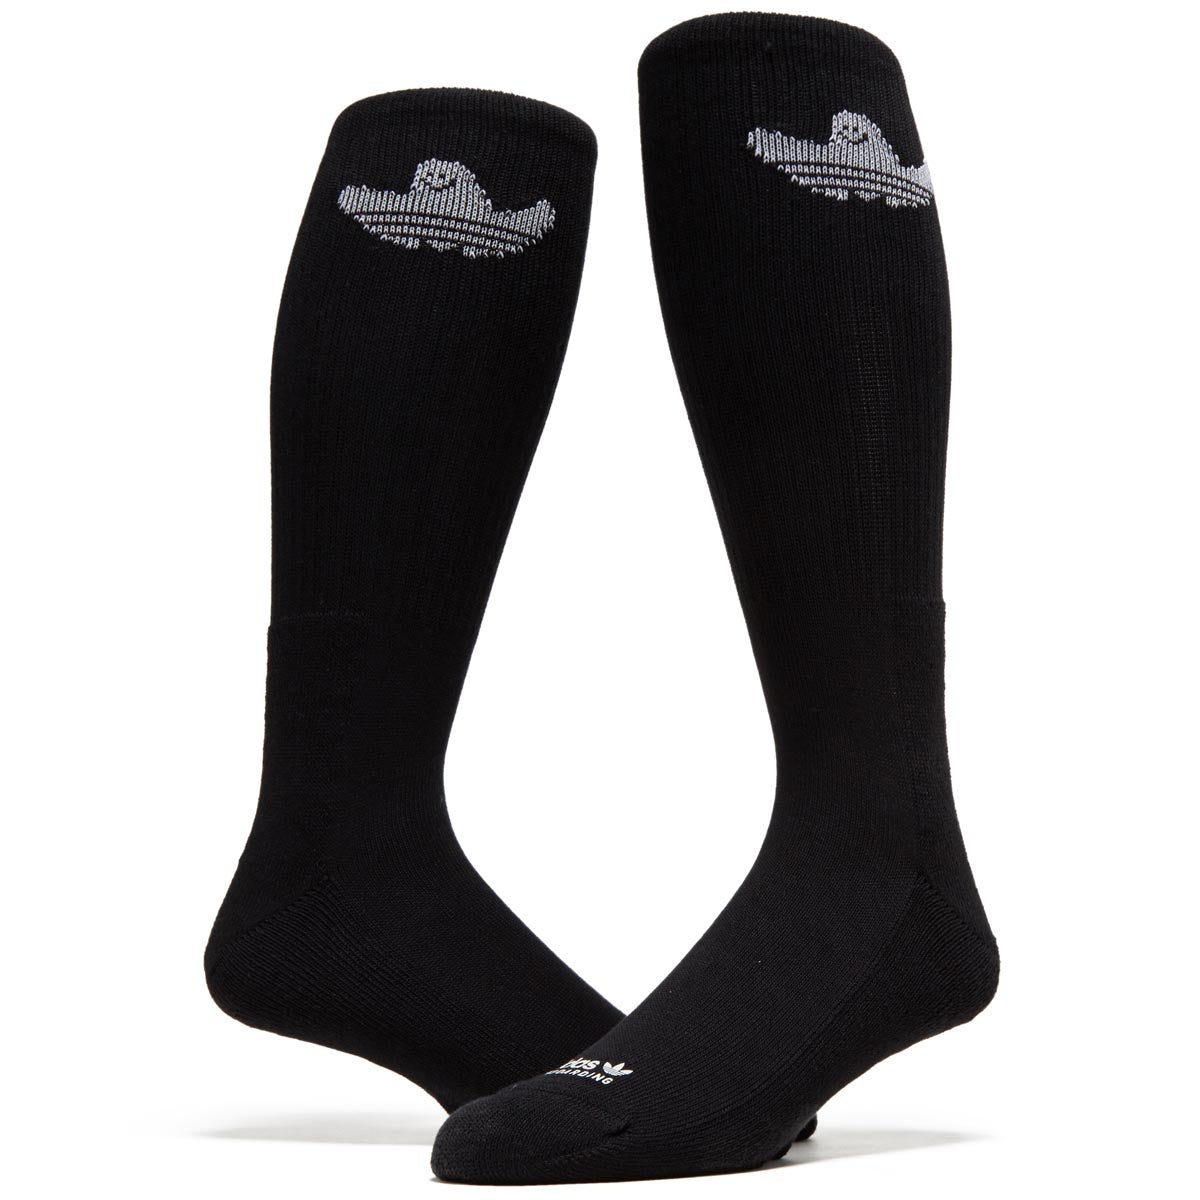 Adidas Shmoo Socks - Black image 2